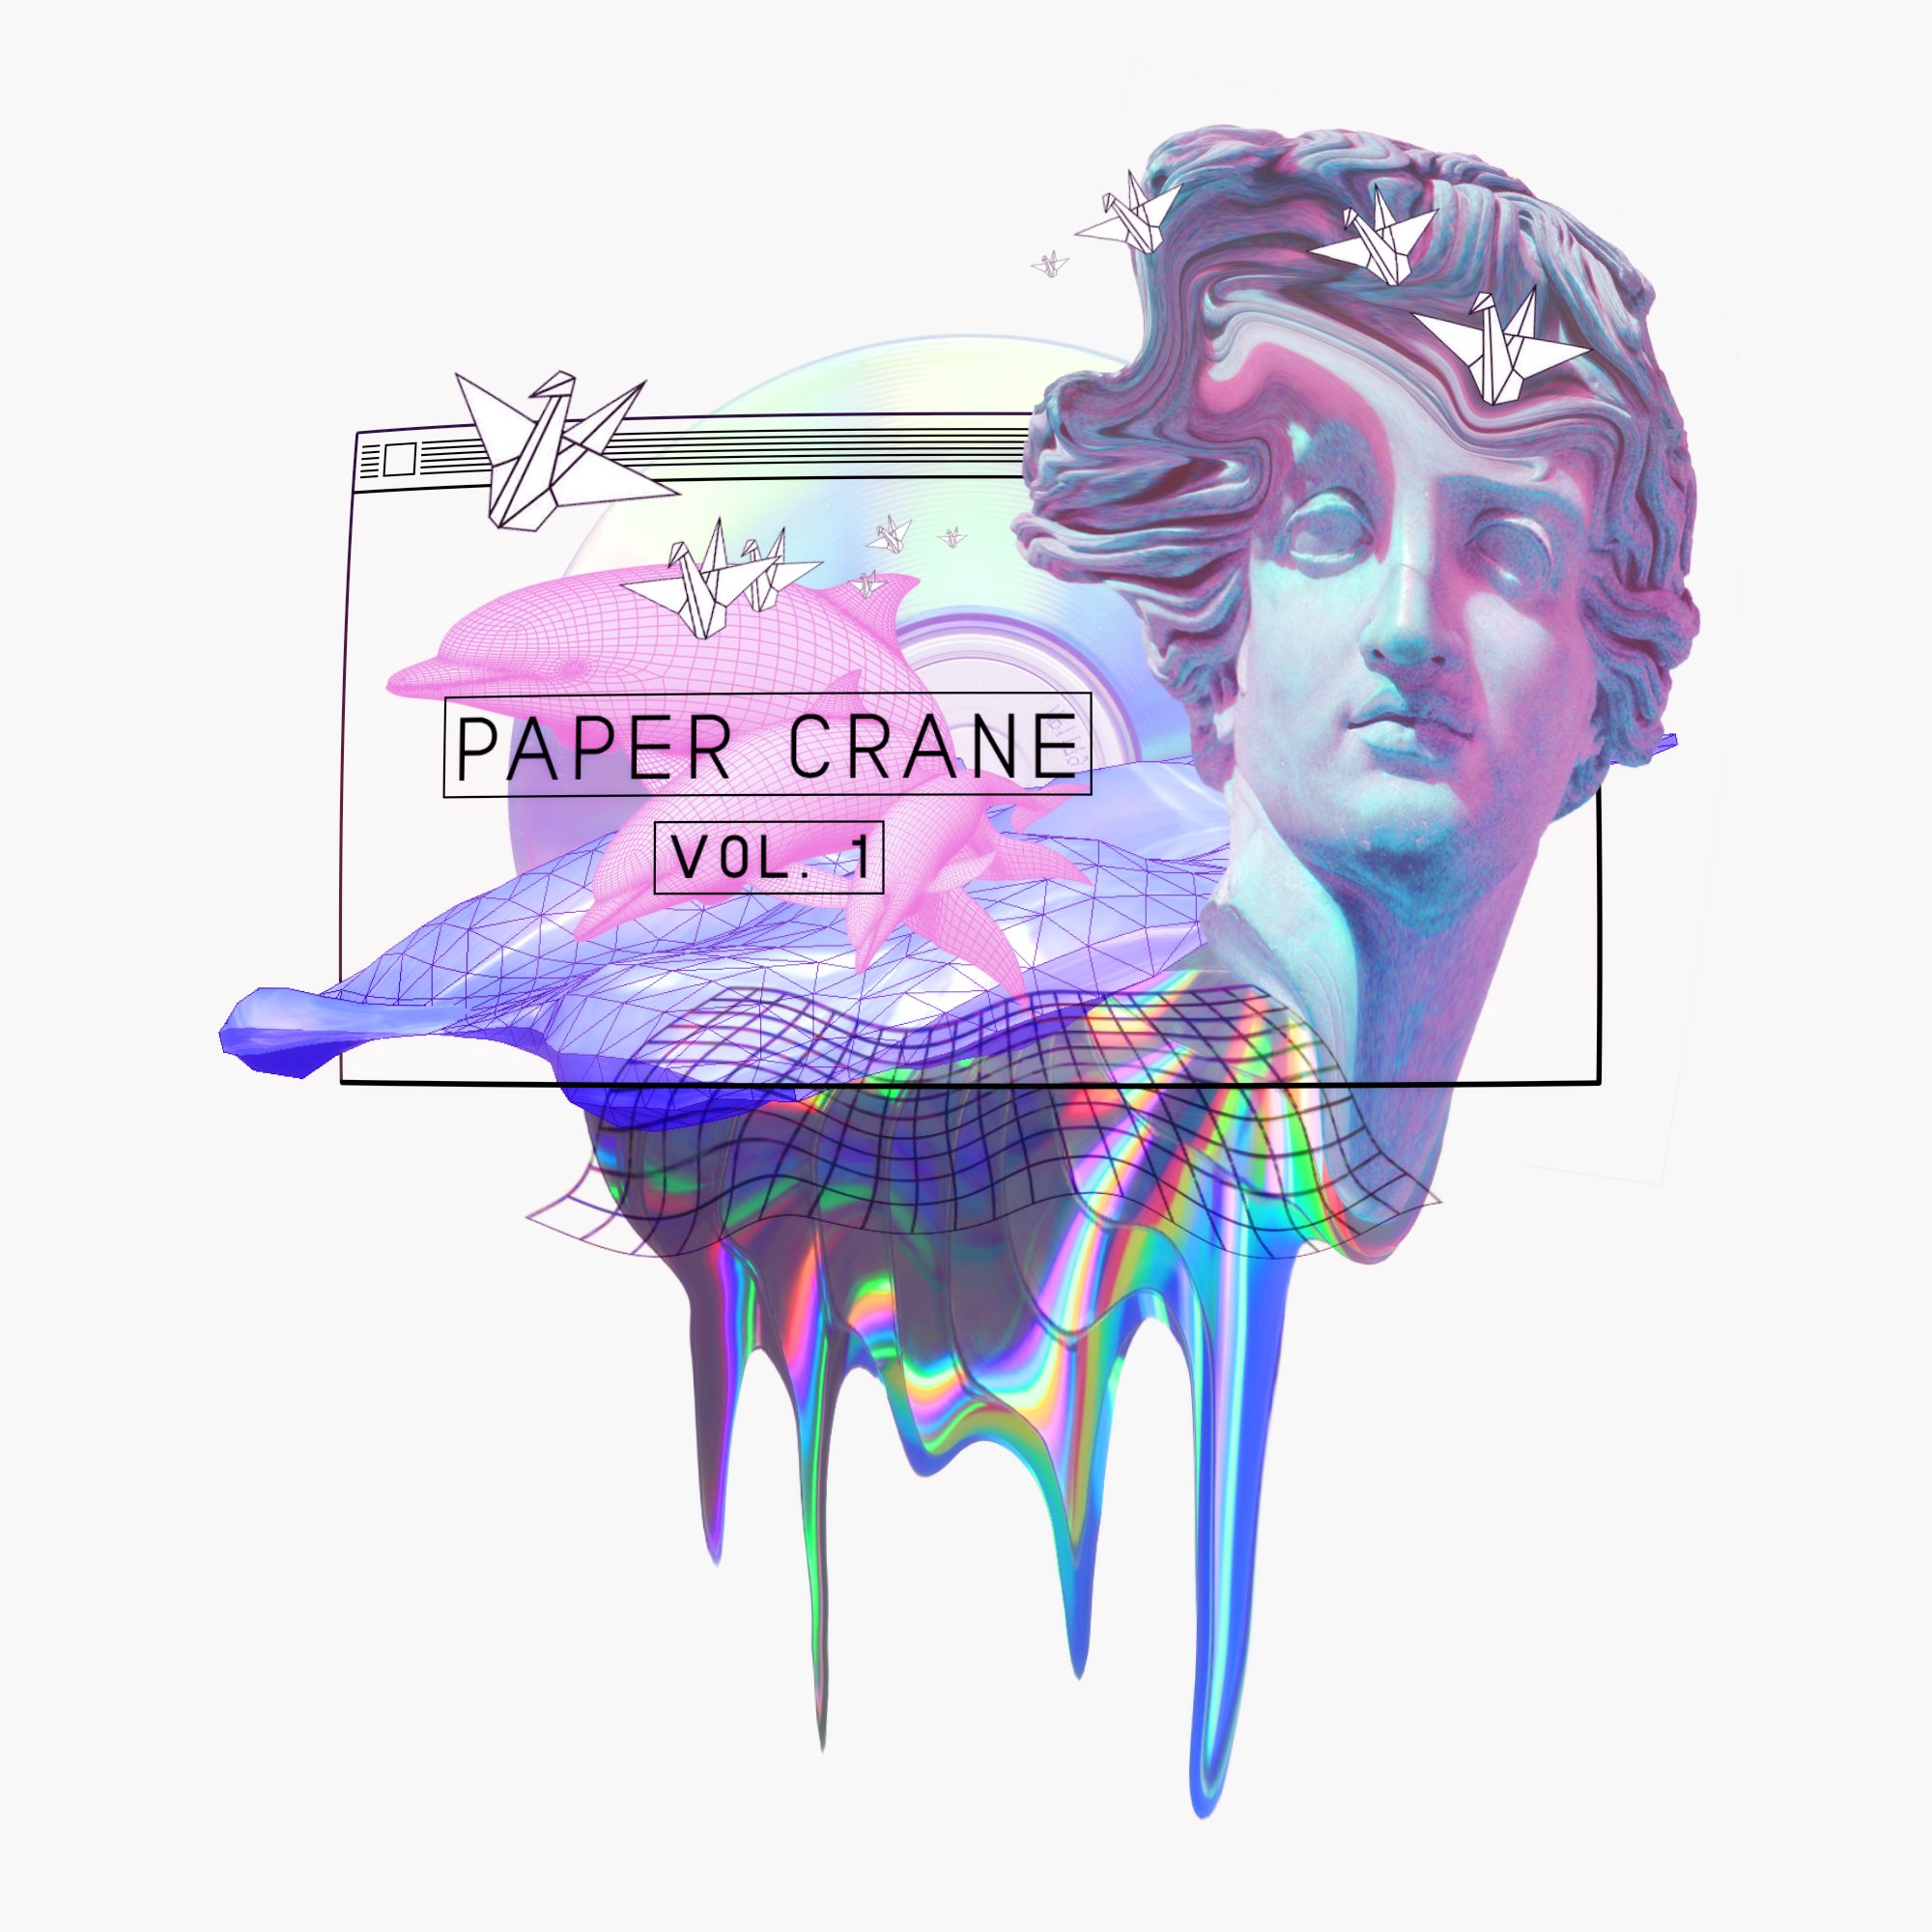 Фанфики по fundamental paper education. Paper Crane Vol. 1. Electro Music обложка. Paper Crane часы. Обложки для электро музыки.